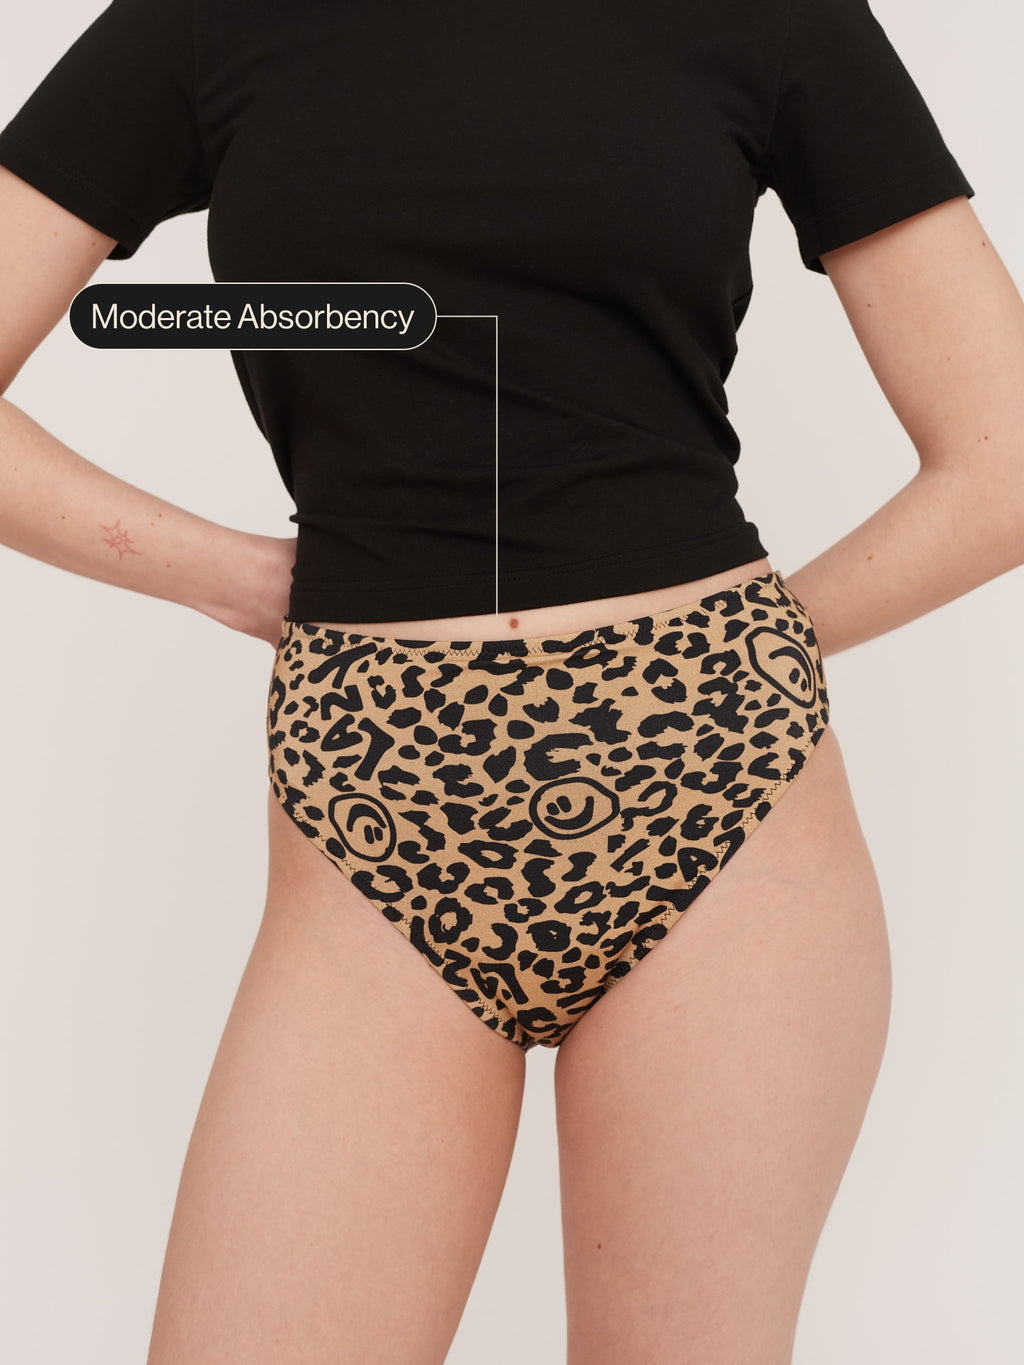 Lazy Oaf X ohne Leopard Period Pants - Moderate